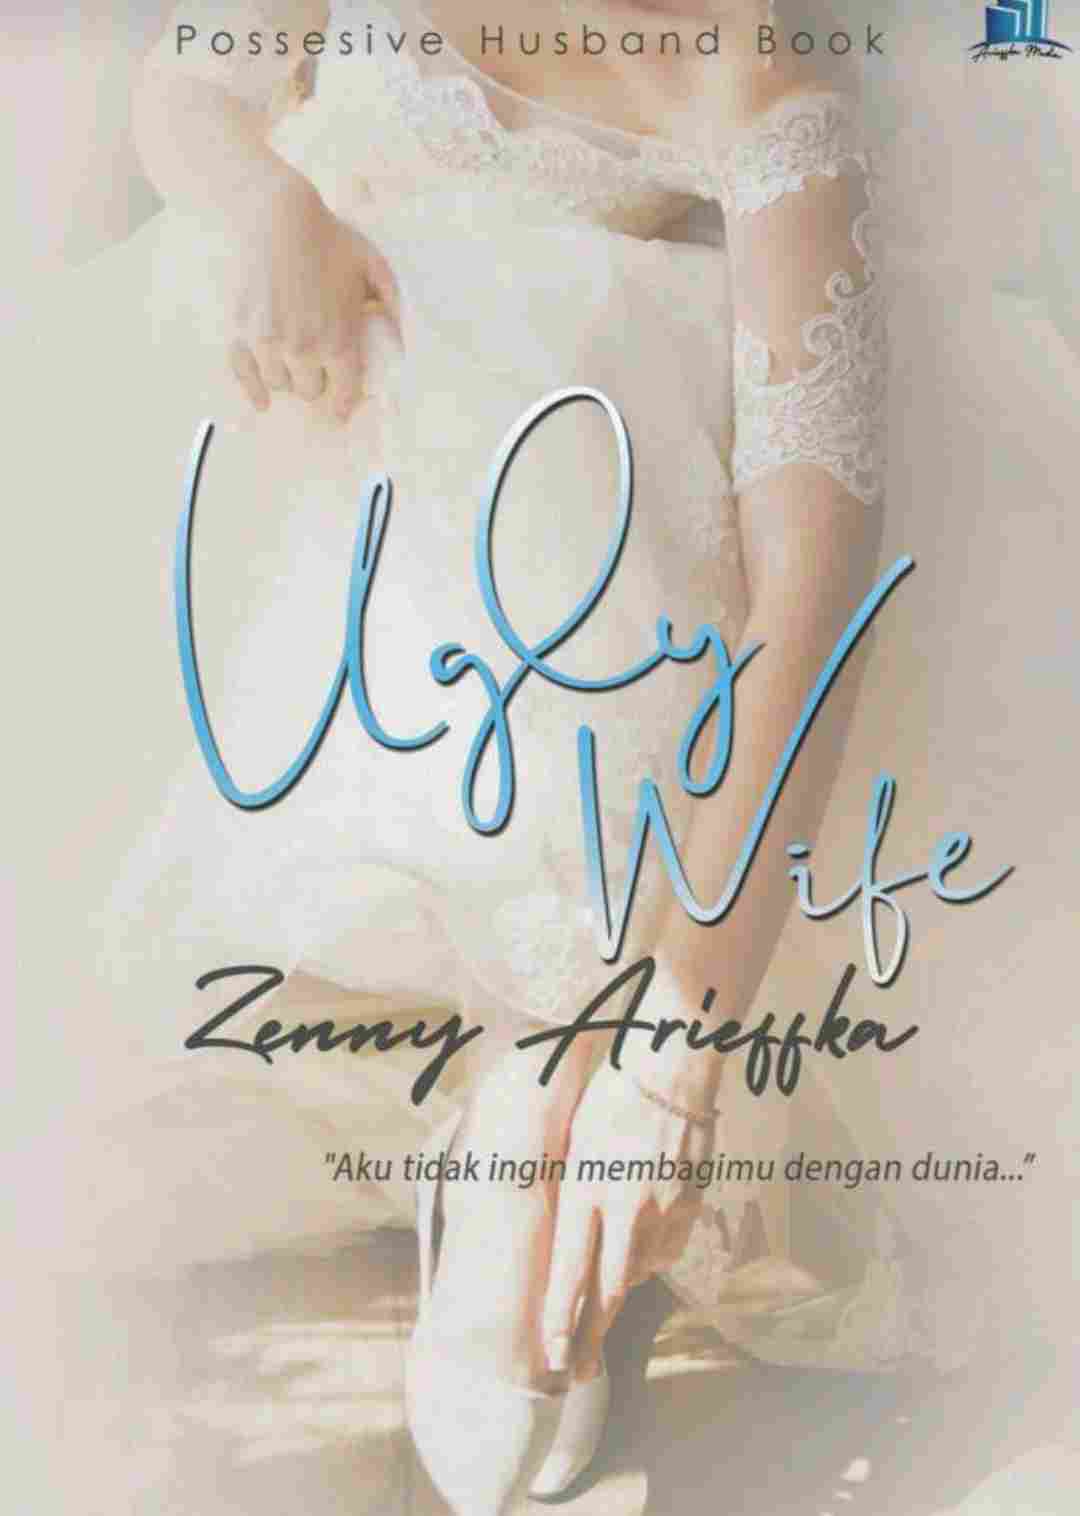 Ugly Wife Karya Zenny Arieffka PDF - Harunup